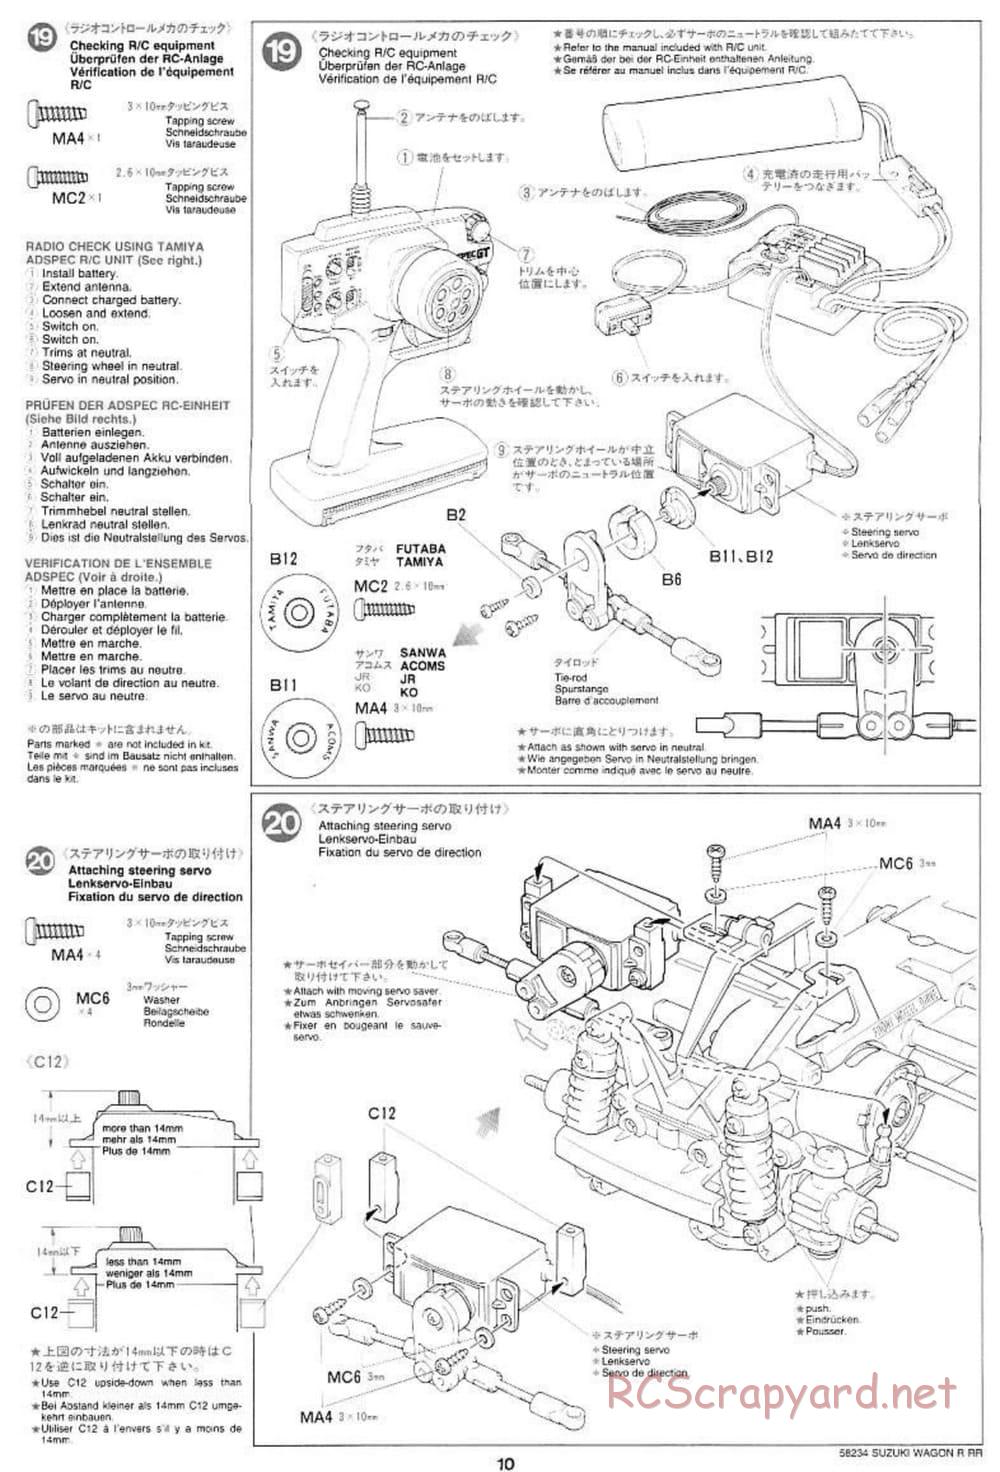 Tamiya - Suzuki WagonR-RR - M03 Chassis - Manual - Page 10